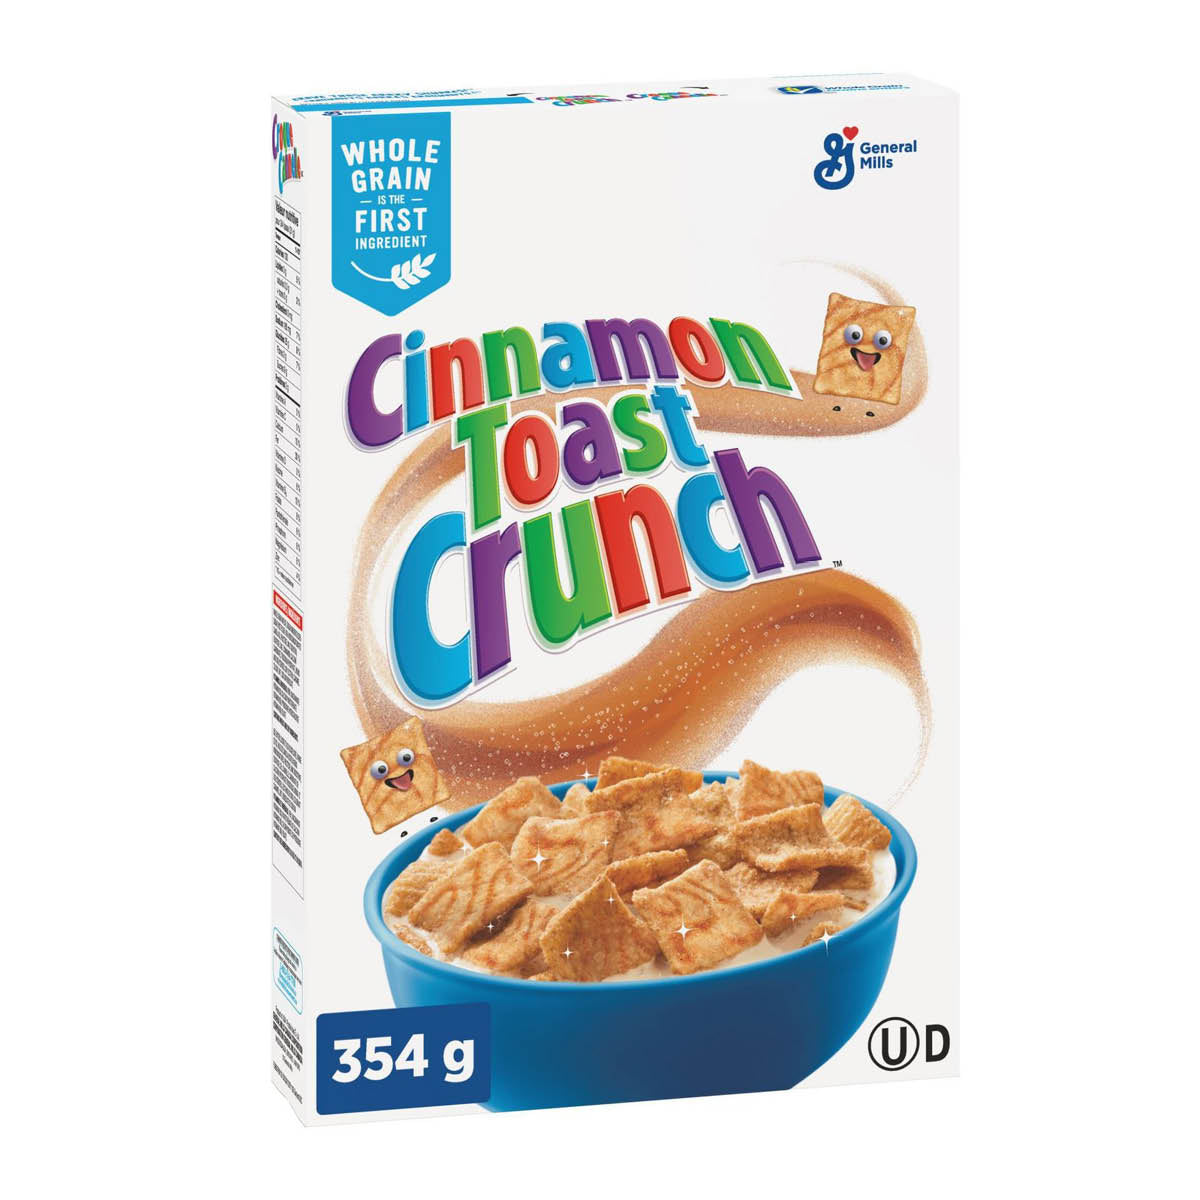 Cinnamon Toast Crunch Cereal, 354g